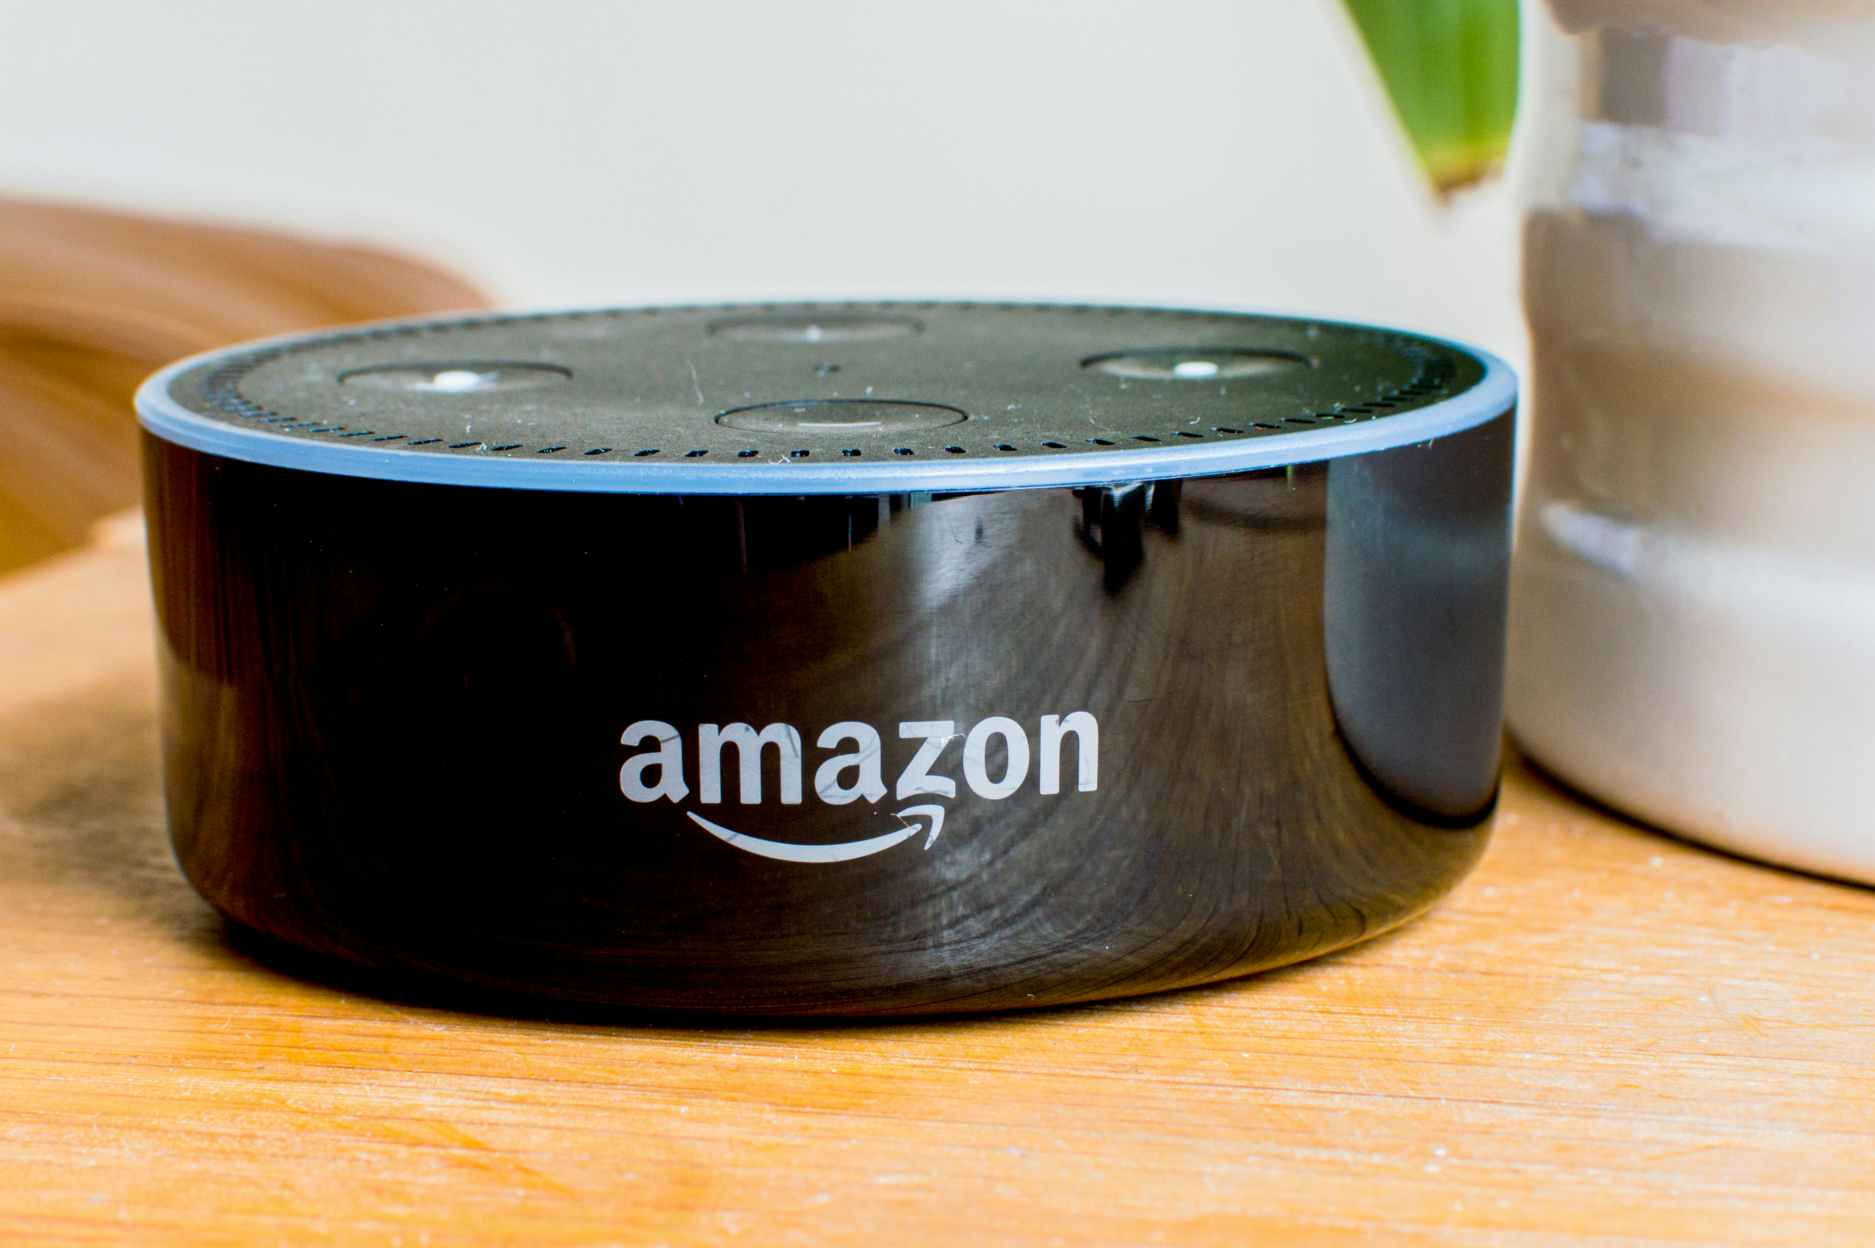 Amazon echo dot speaker sitting on a table